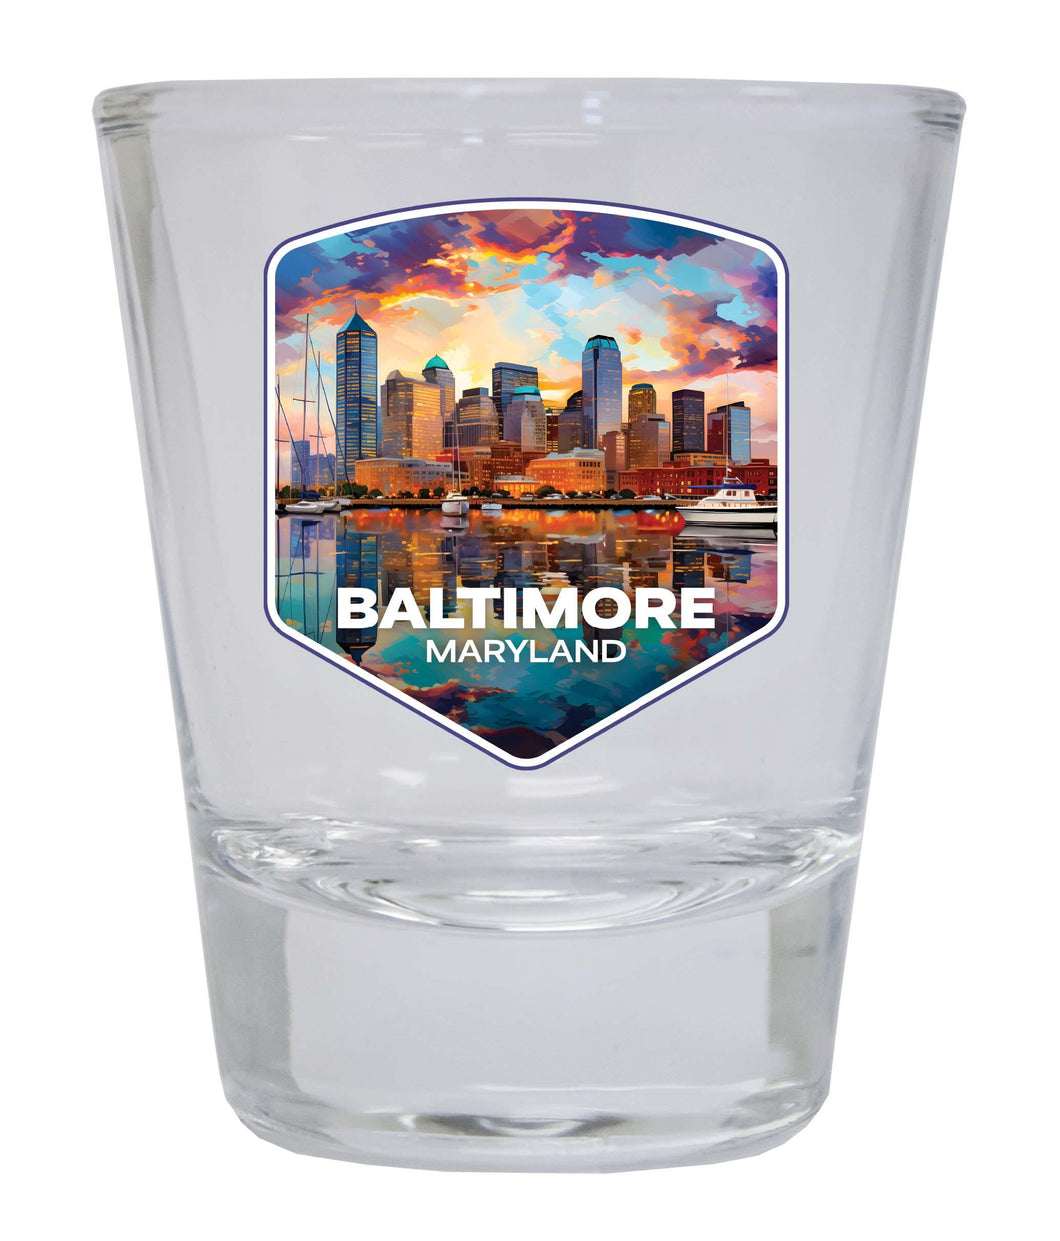 Baltimore Maryland A Souvenir 1.5 Ounce Shot Glass Round